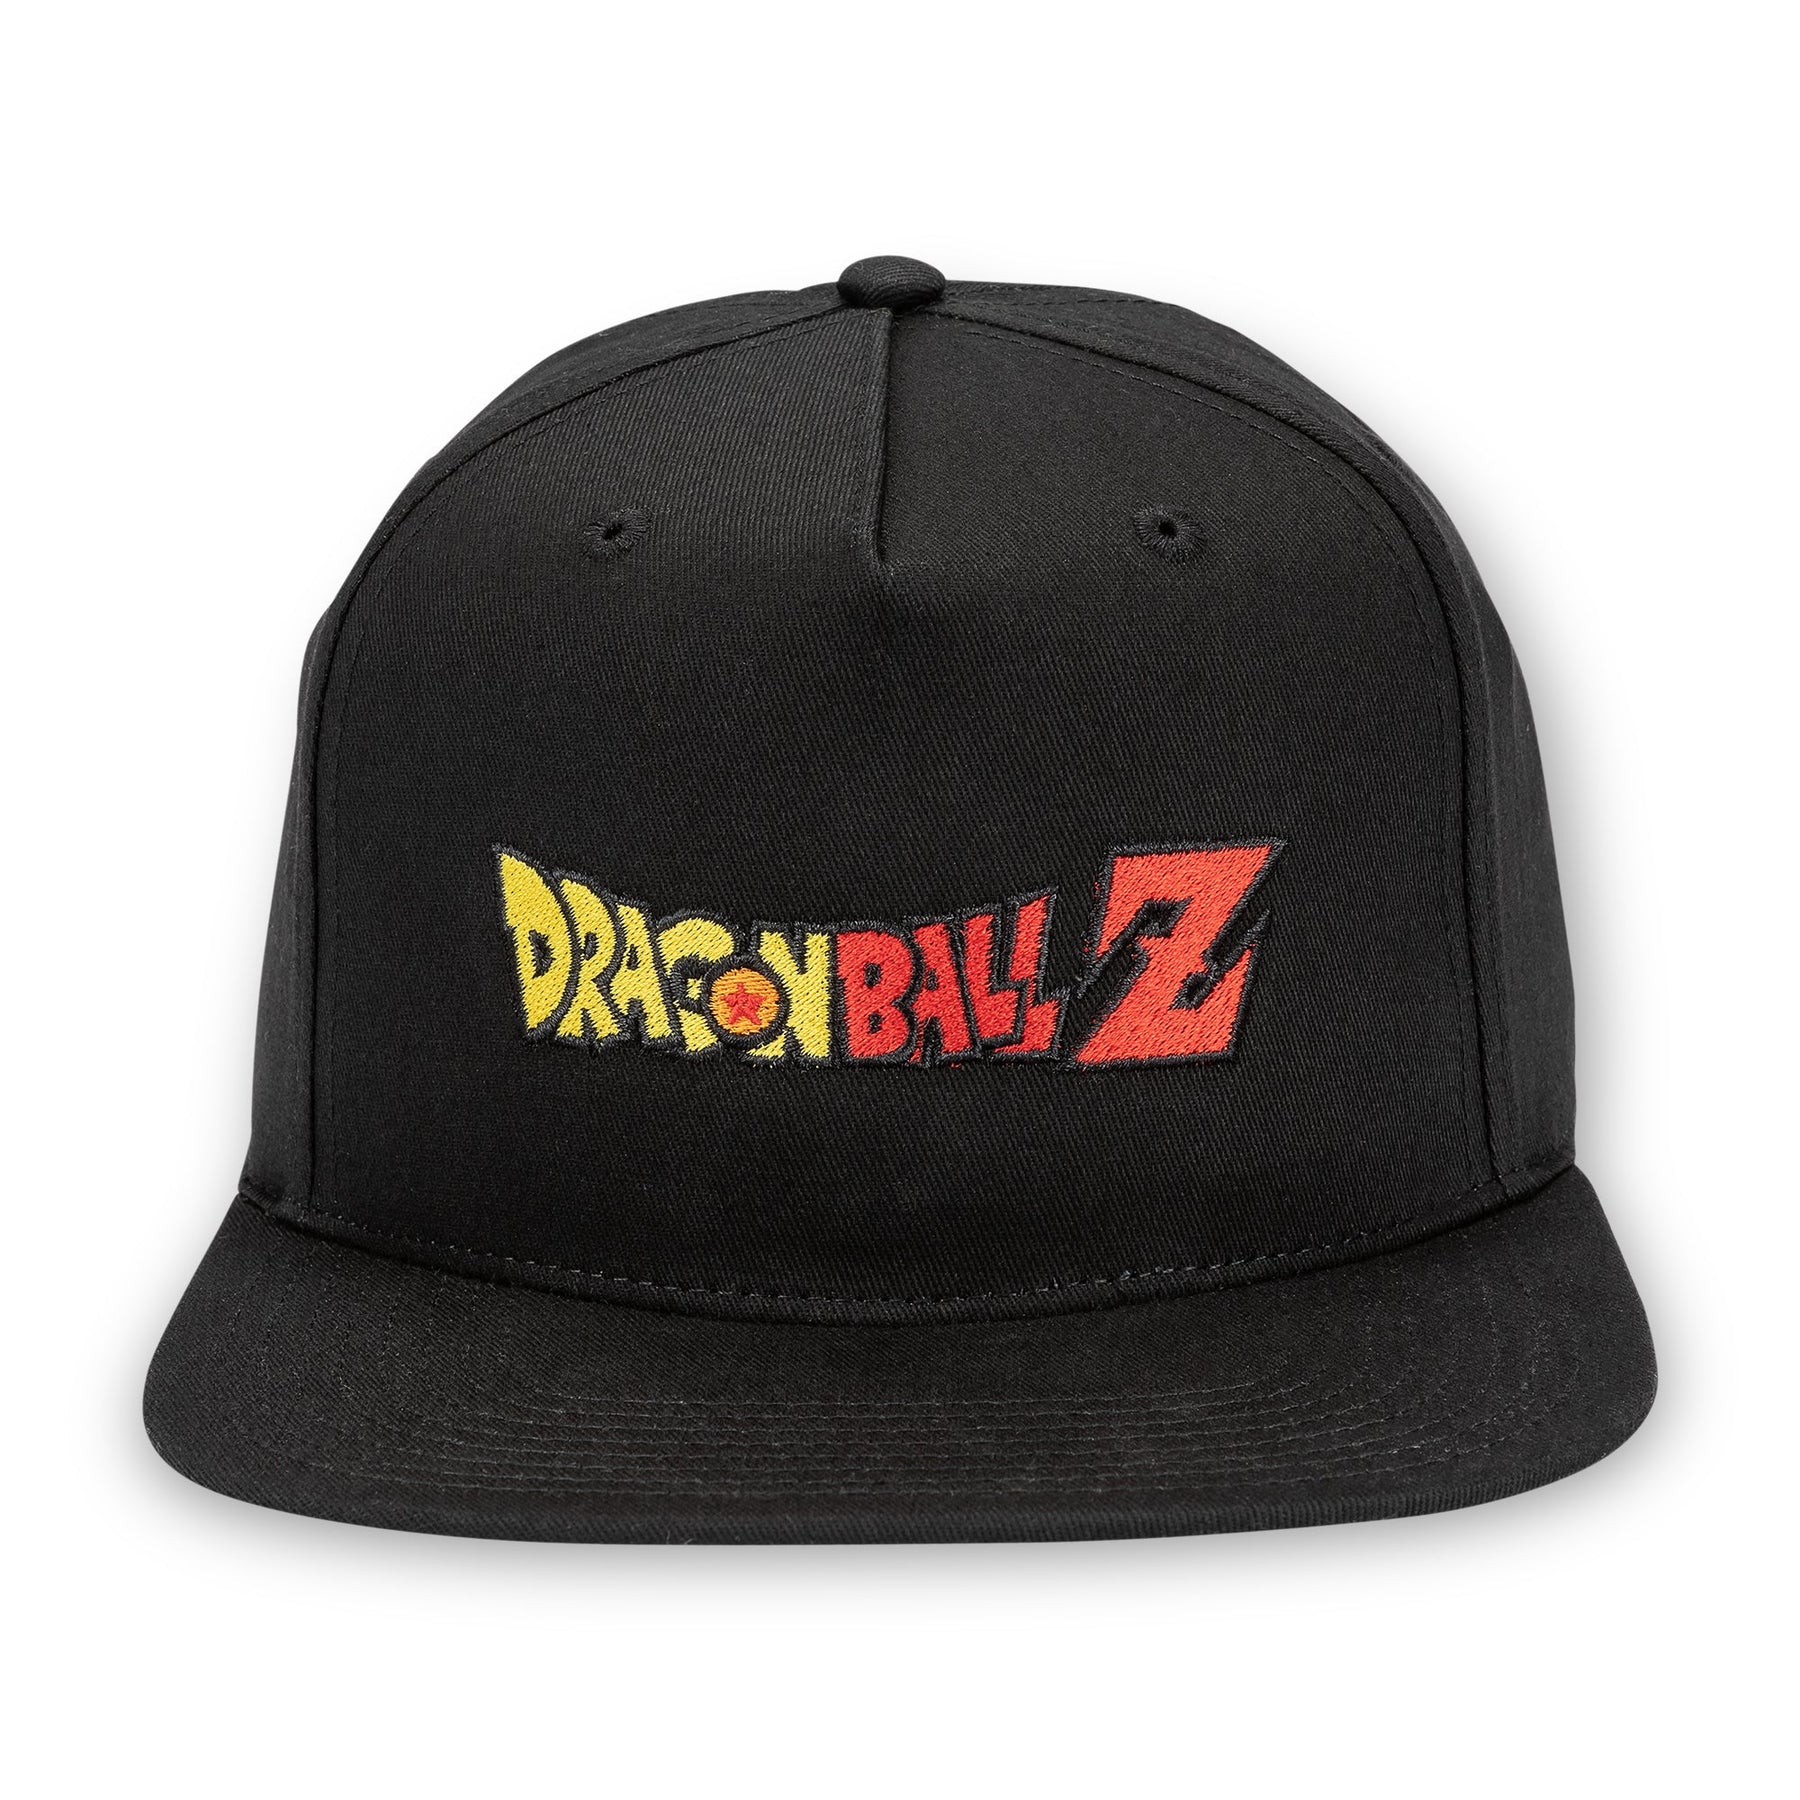 Dragon Ball Z Logo Adults Snapback Cap